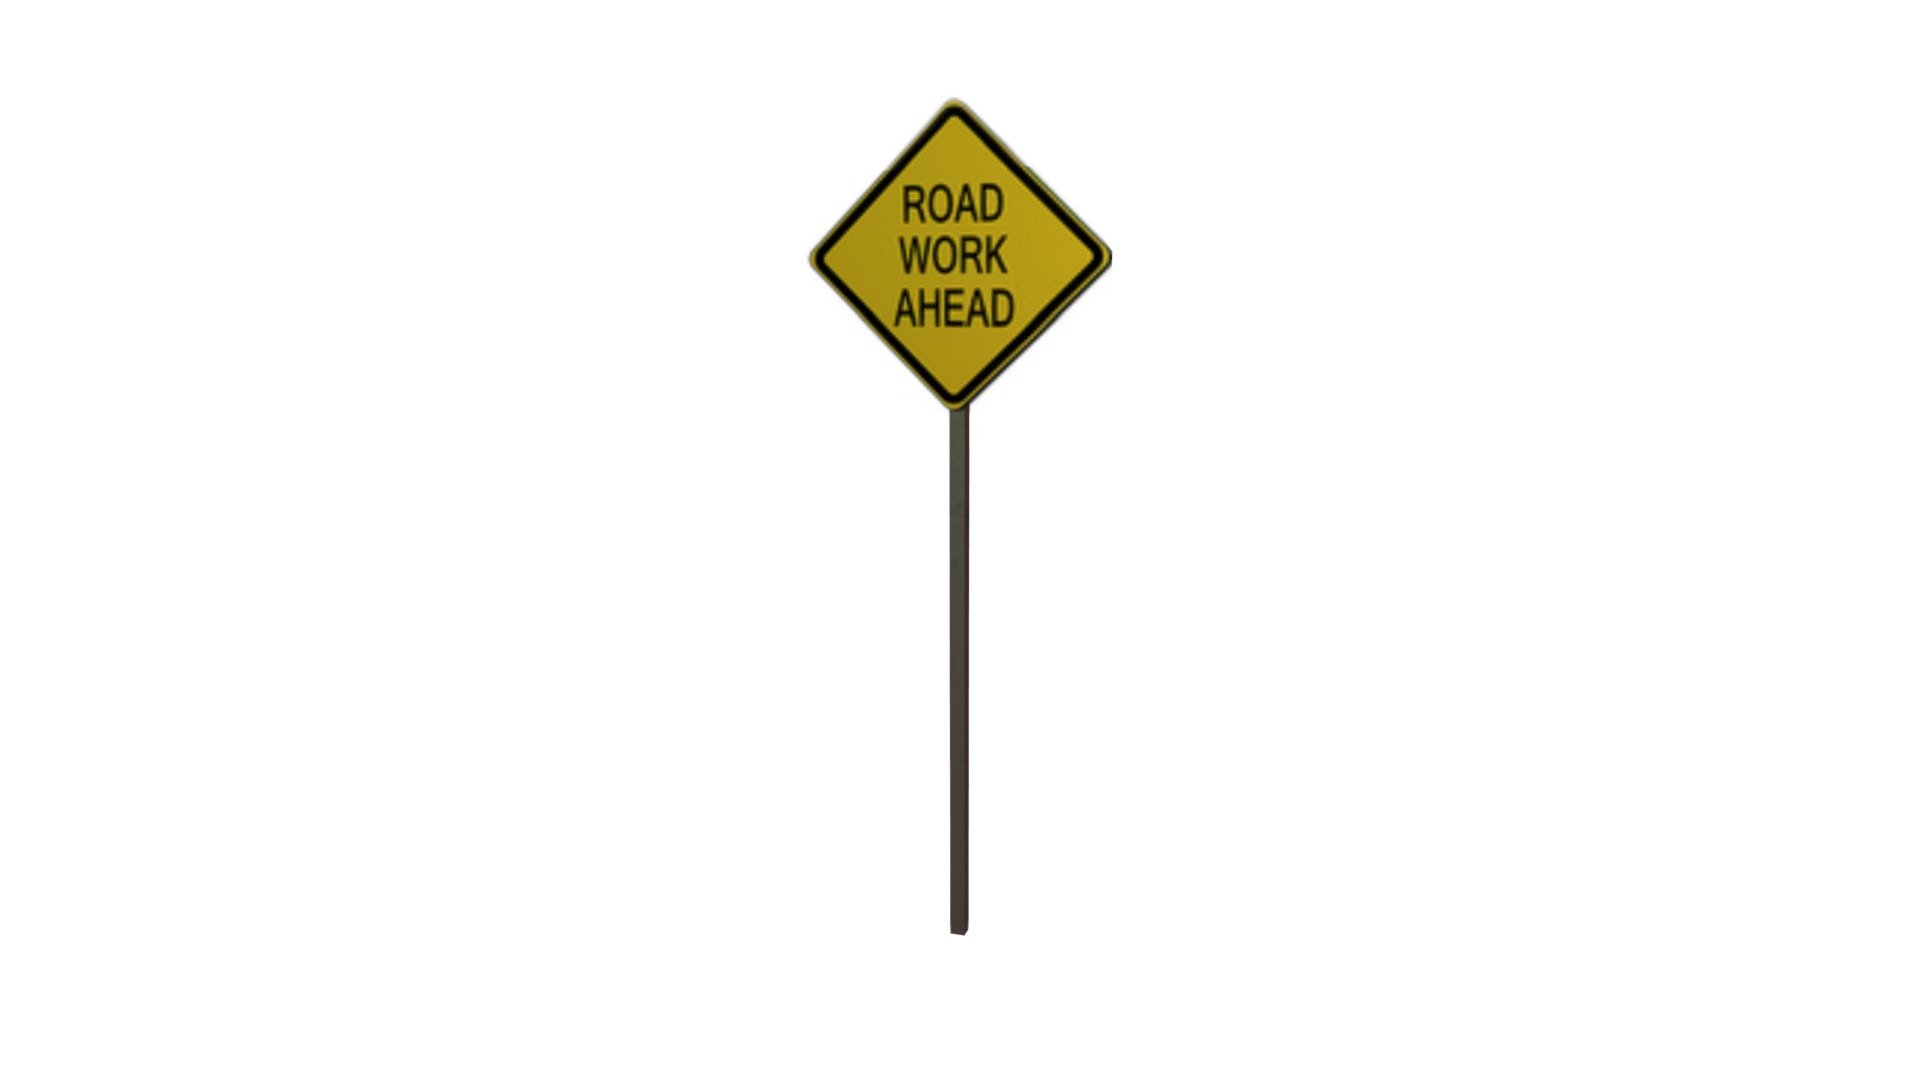 Road Sign
Made in Maya - Road Sign - Buy Royalty Free 3D model by AirStudios (@sebbe613) 3d model